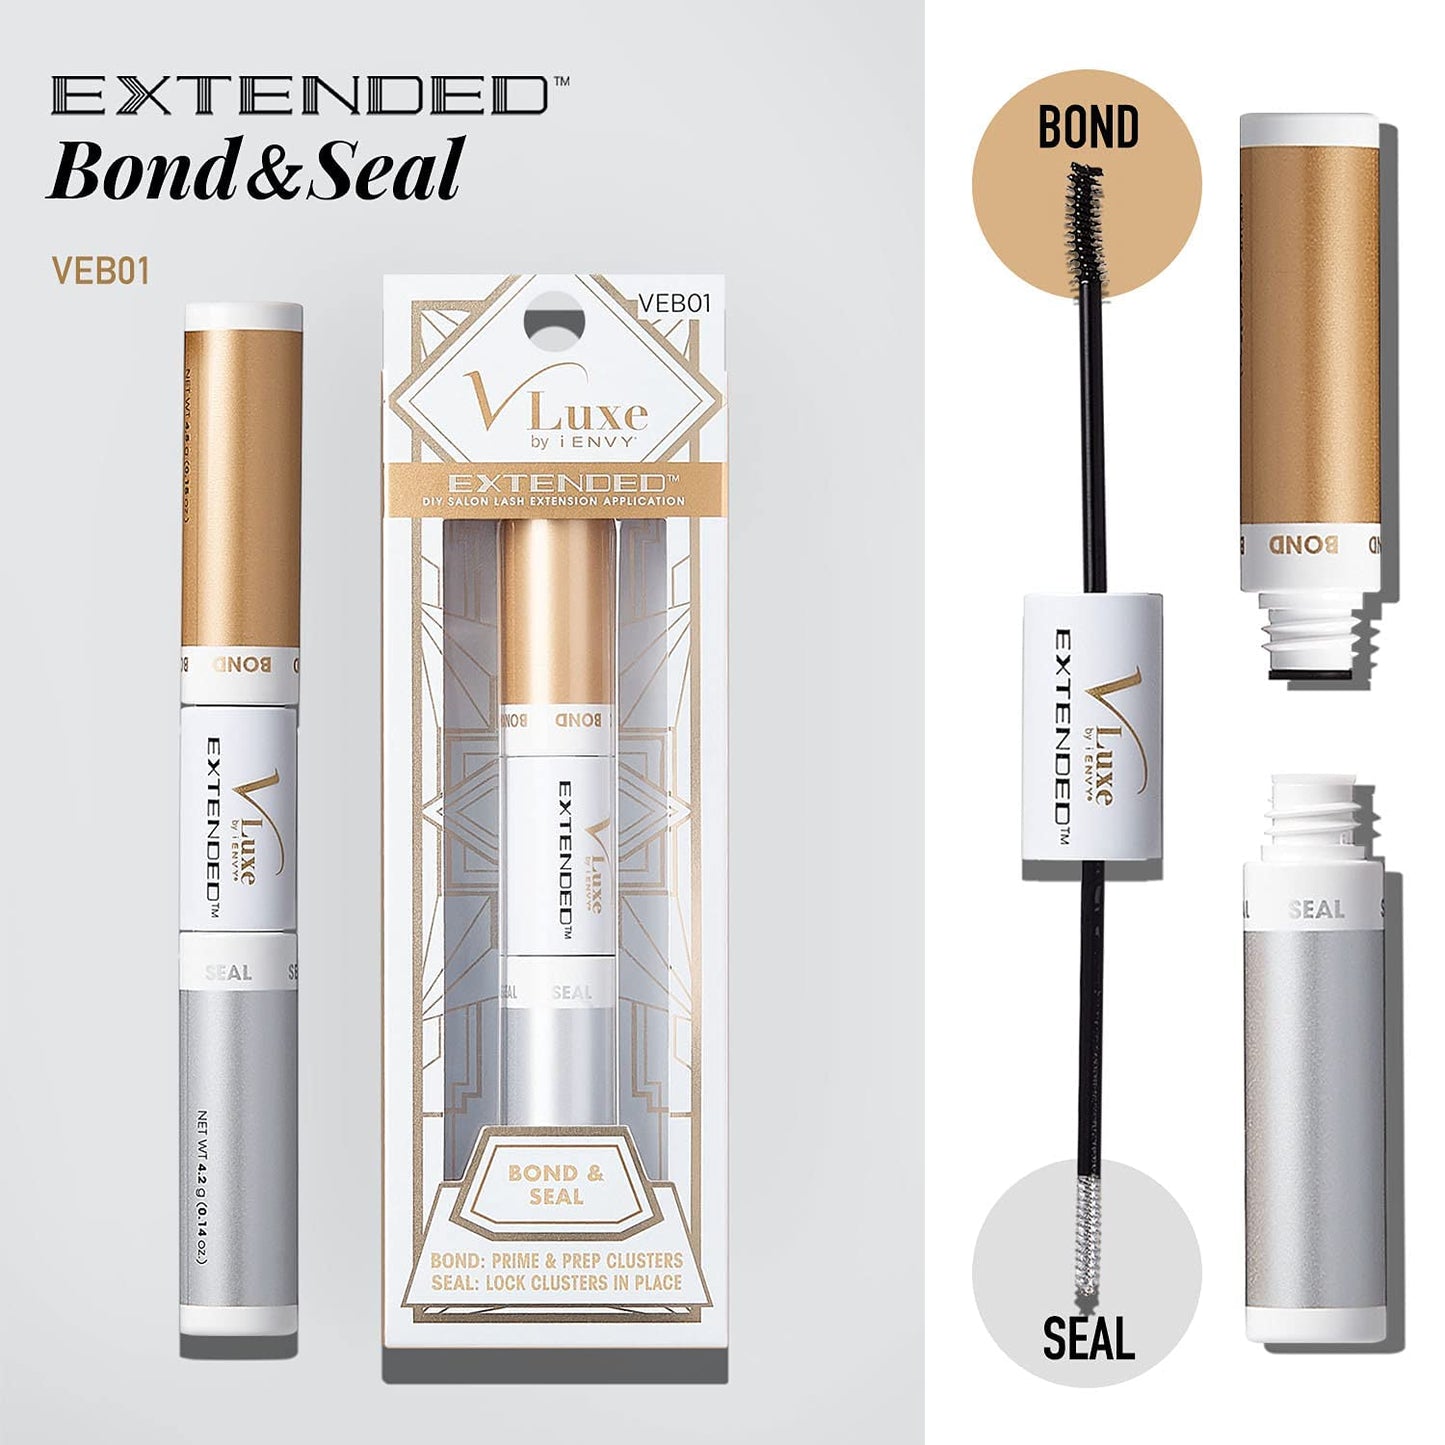 Kiss i-Envy V-Luxe Bond & Seal Extended Collection DIY Salon Lash Extension Application .14 OZ VEB01